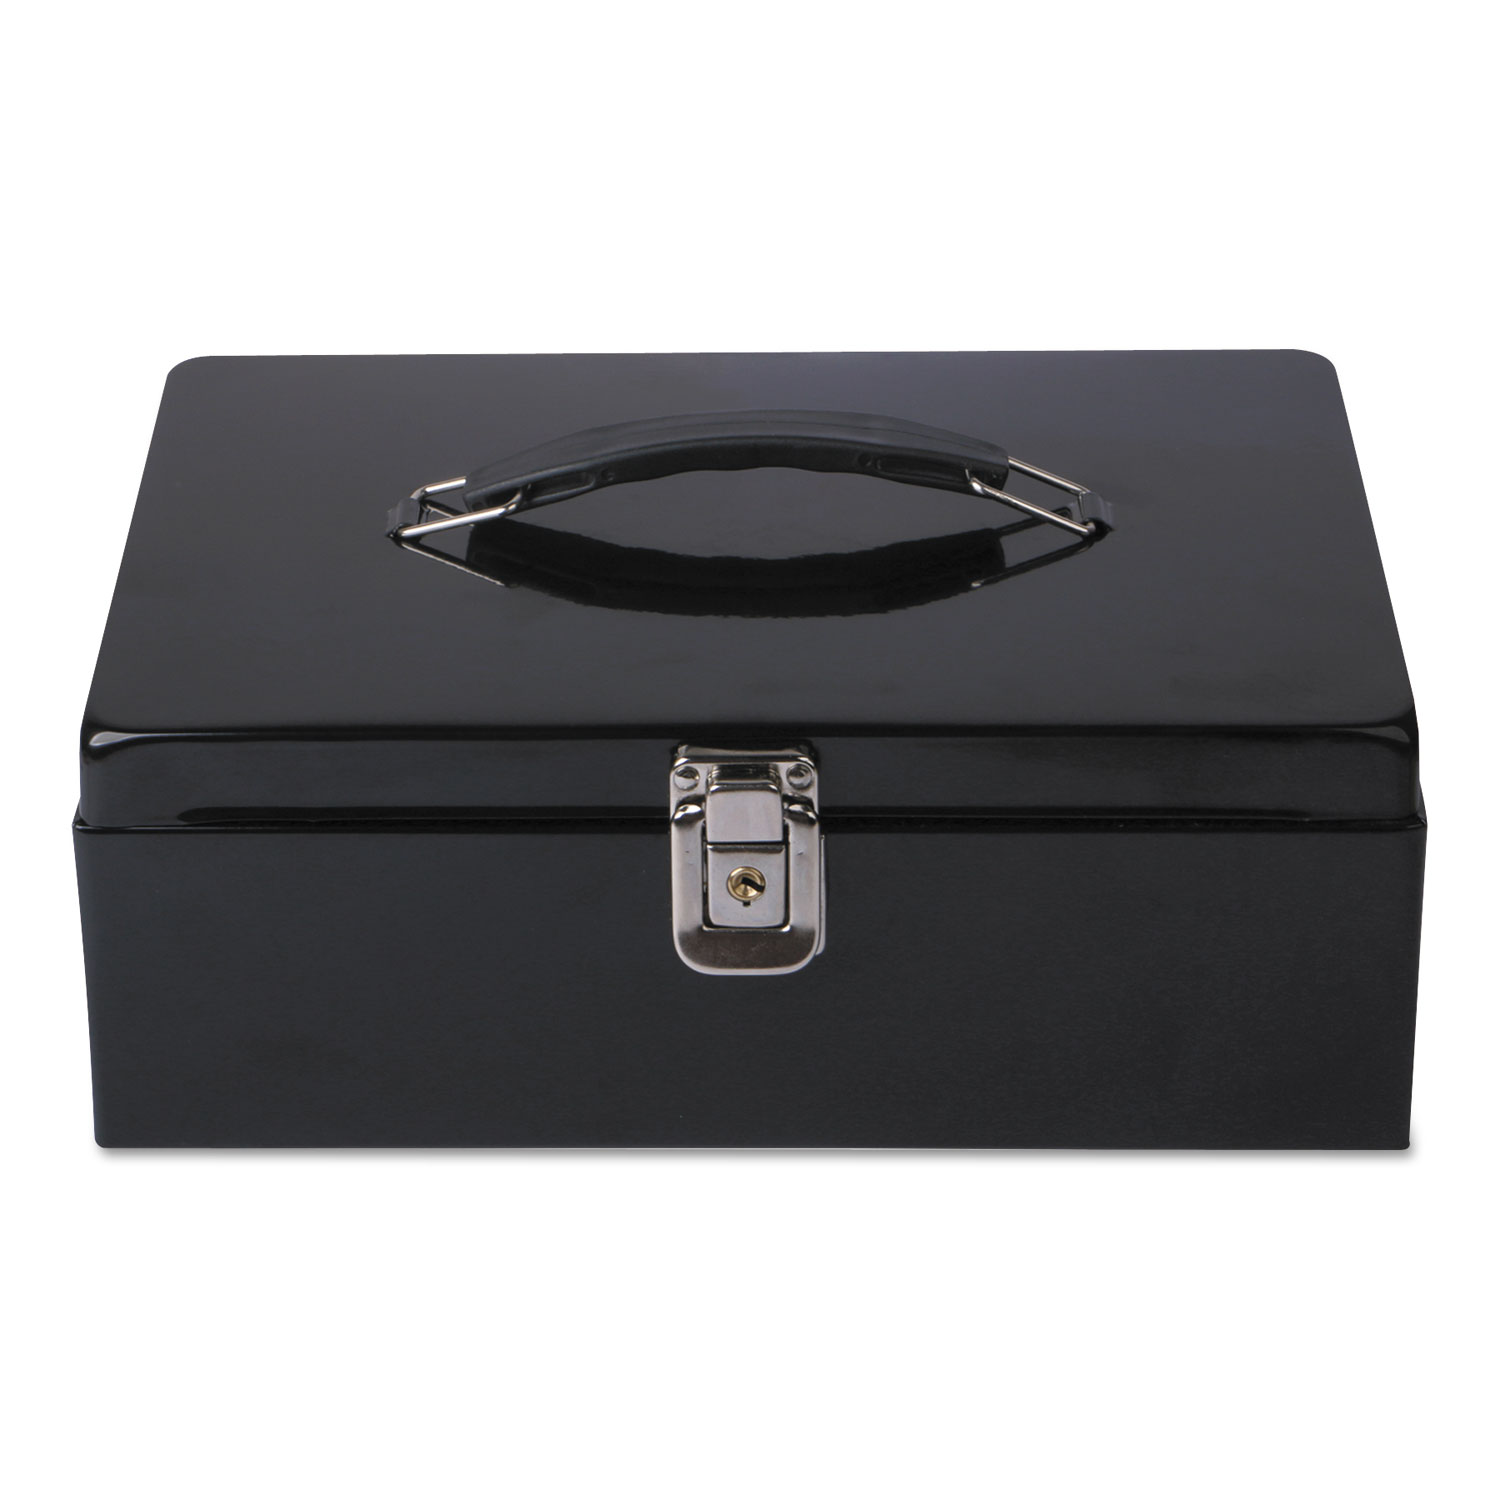 Security Box with Locking Latch, 11 x 7 3/4 x 4, Black